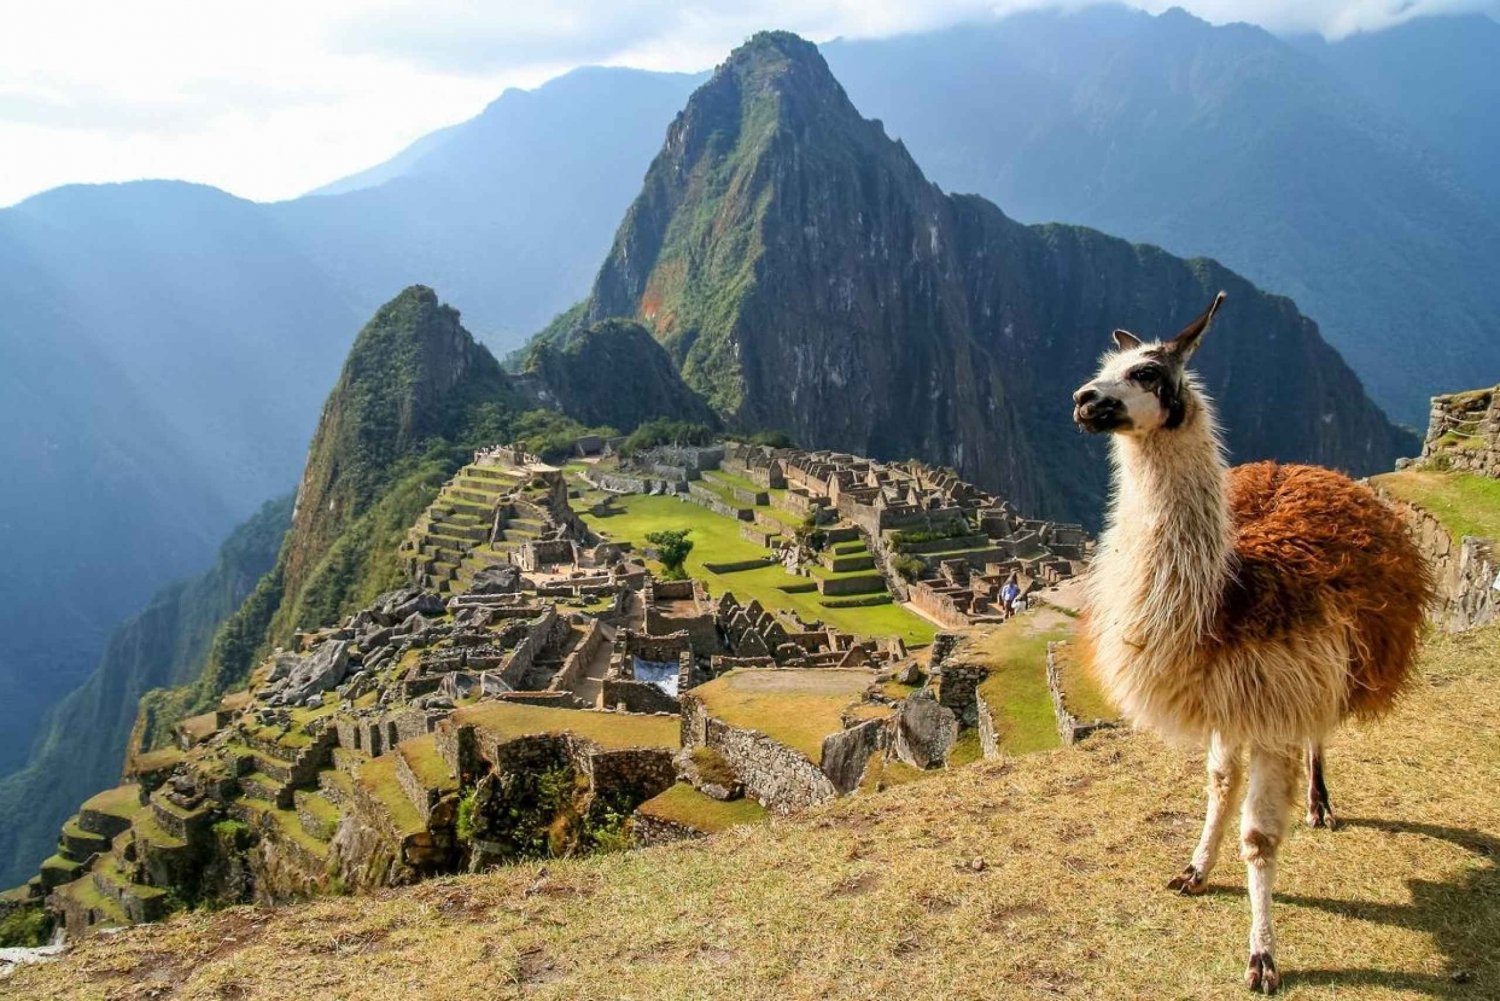 Machu Picchu Adventure: Tickets to the Wonder of the World.